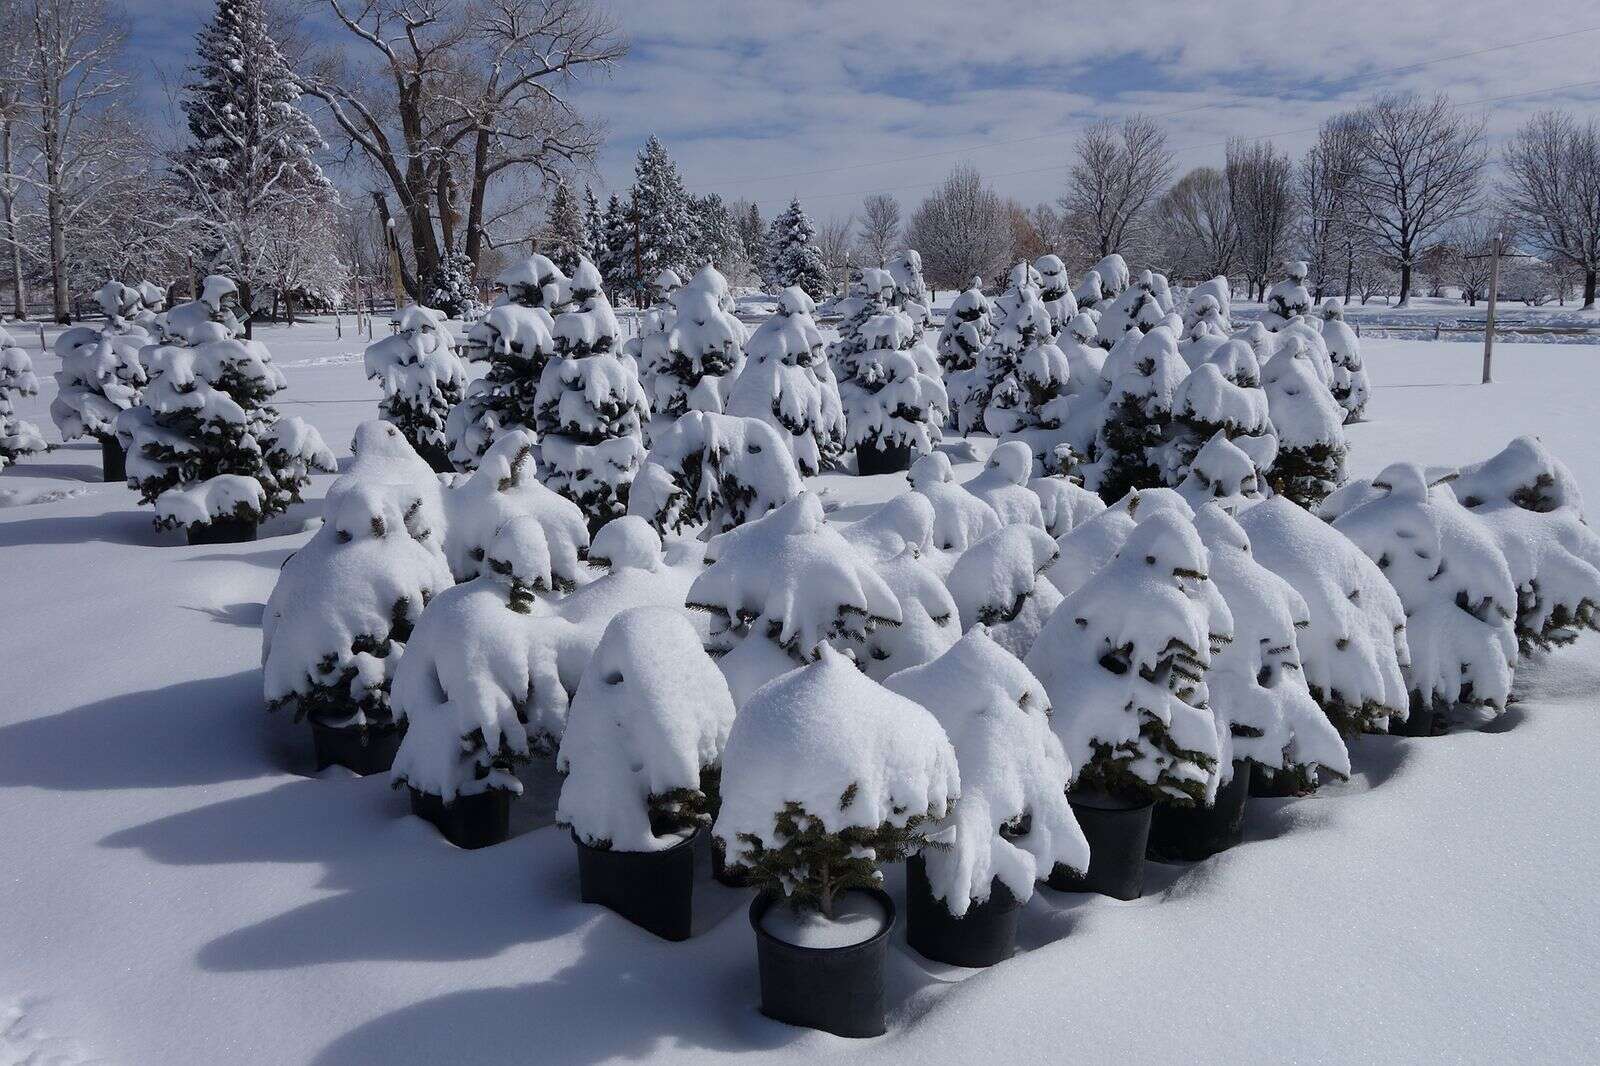  Snow on Evergreen Branches (Calendar)